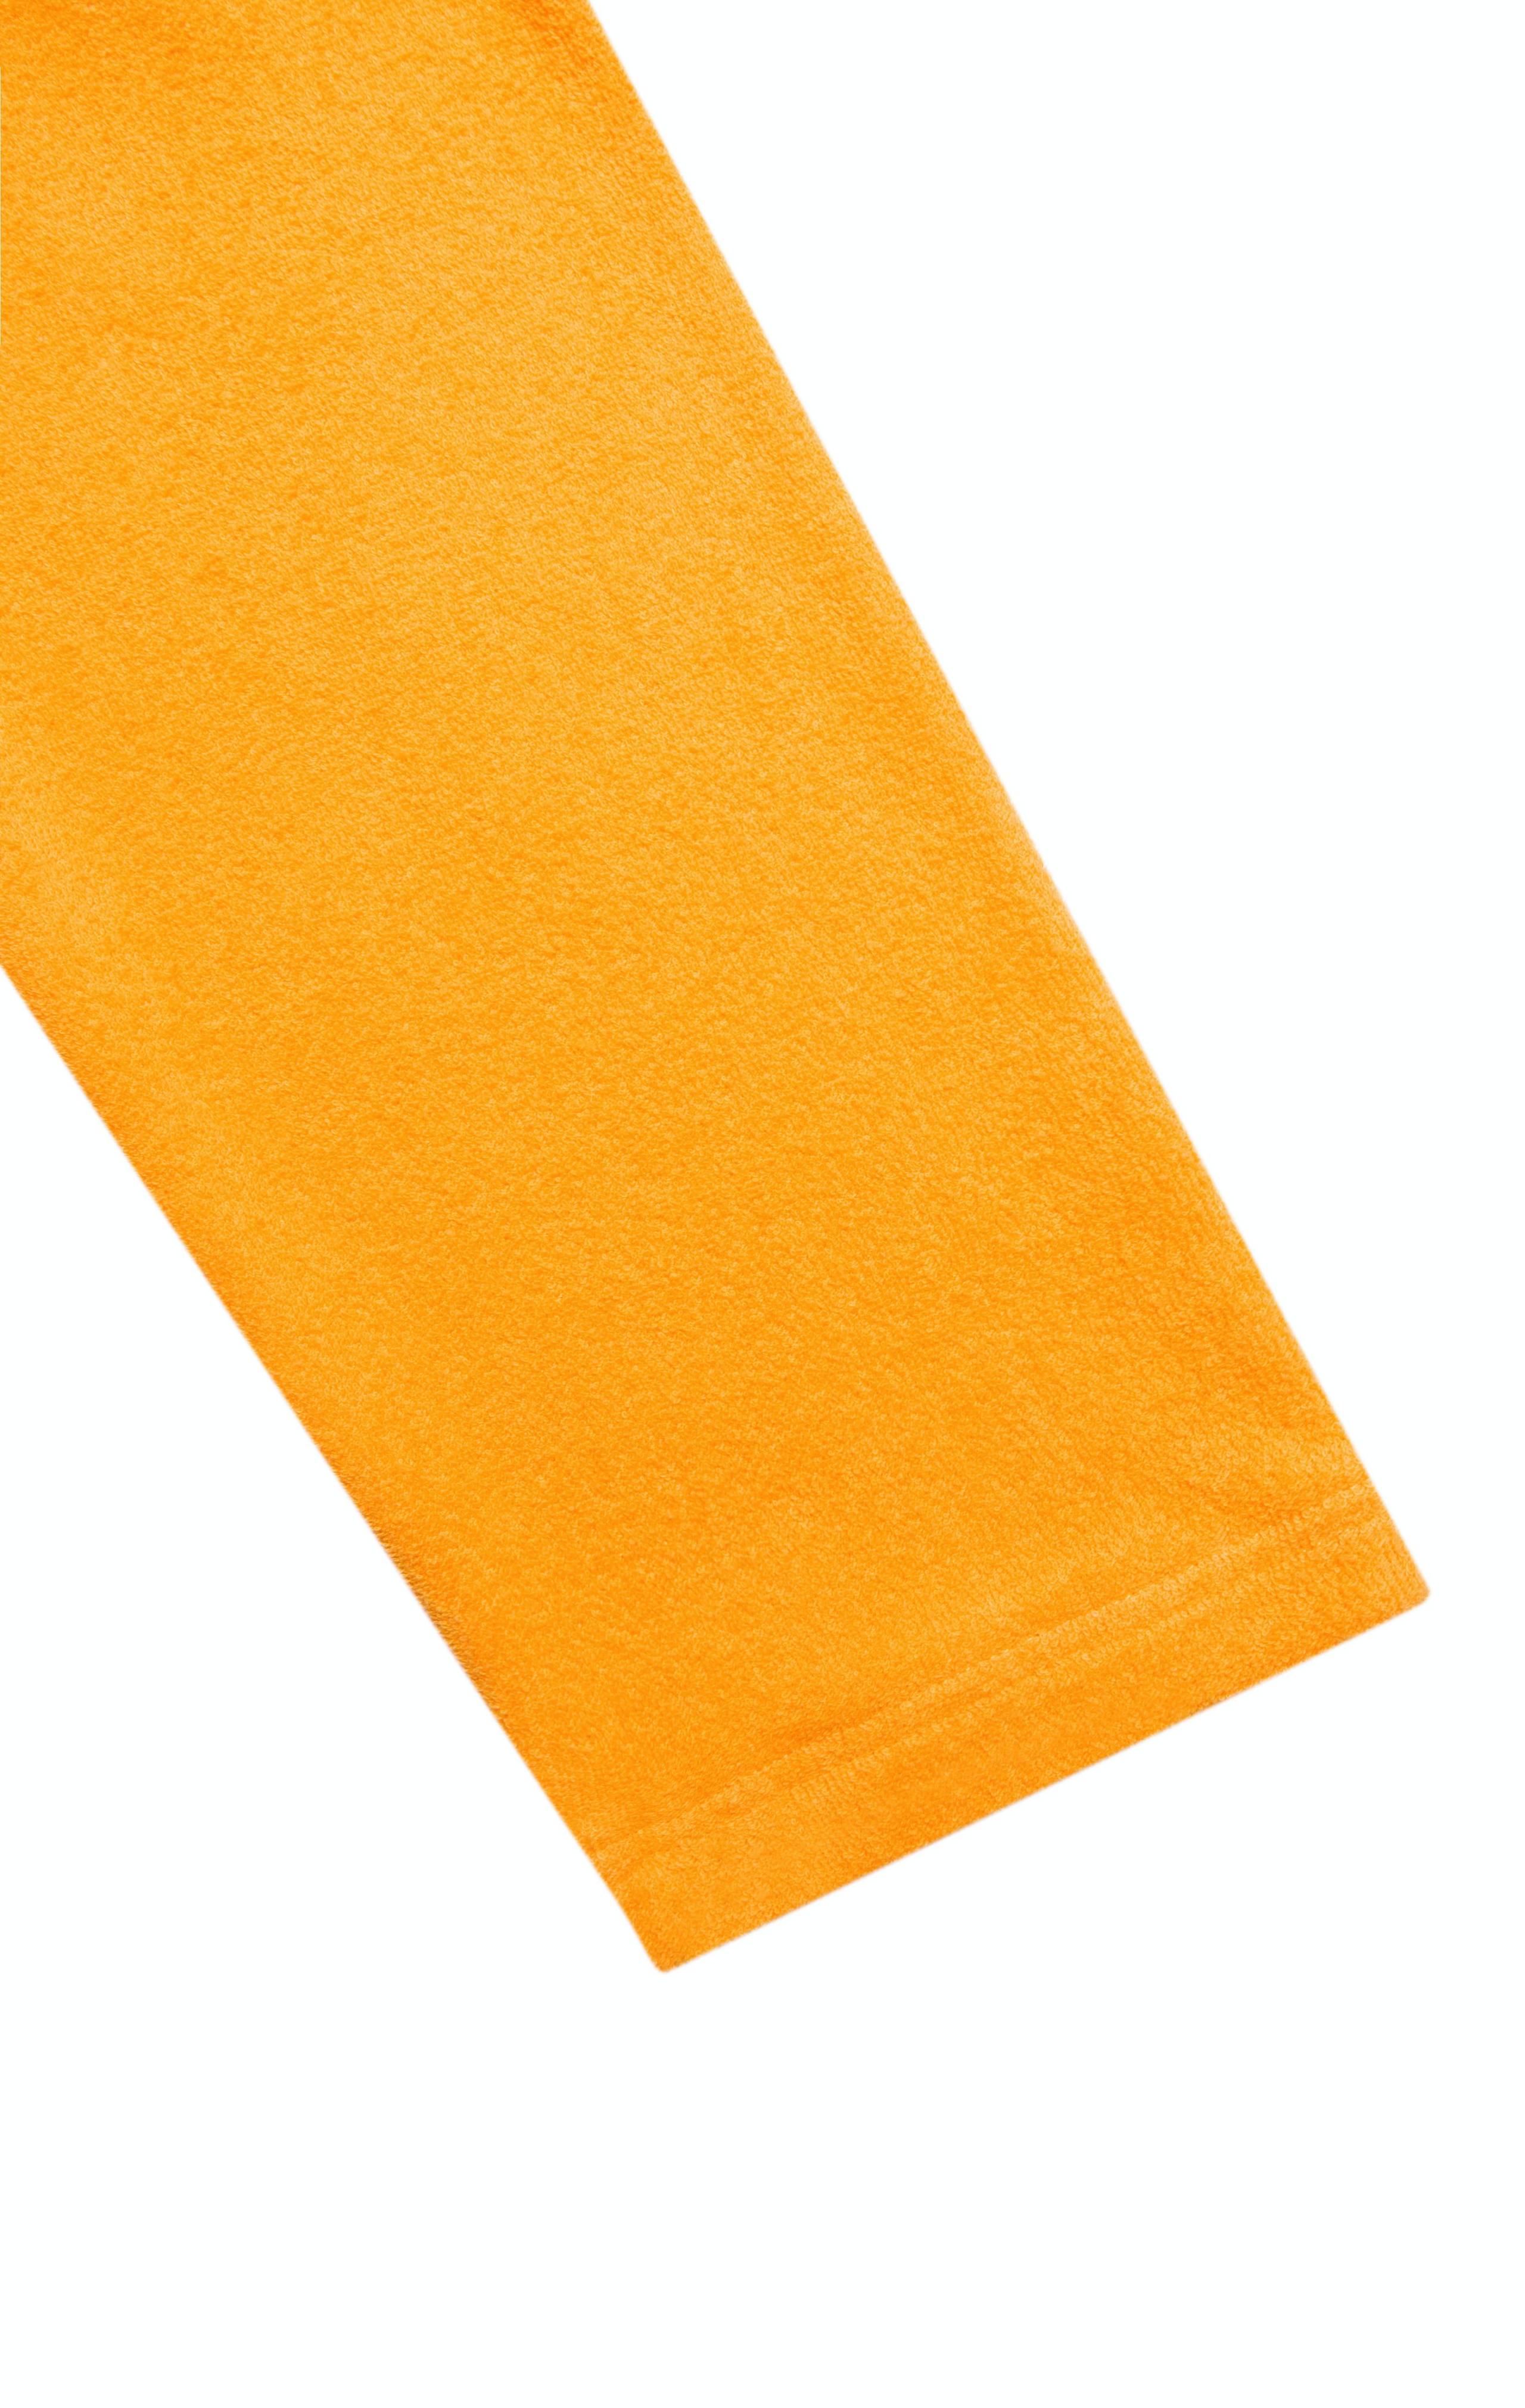 Onepiece Towel Club X Onepiece Towel Jumpsuit Orange - 5